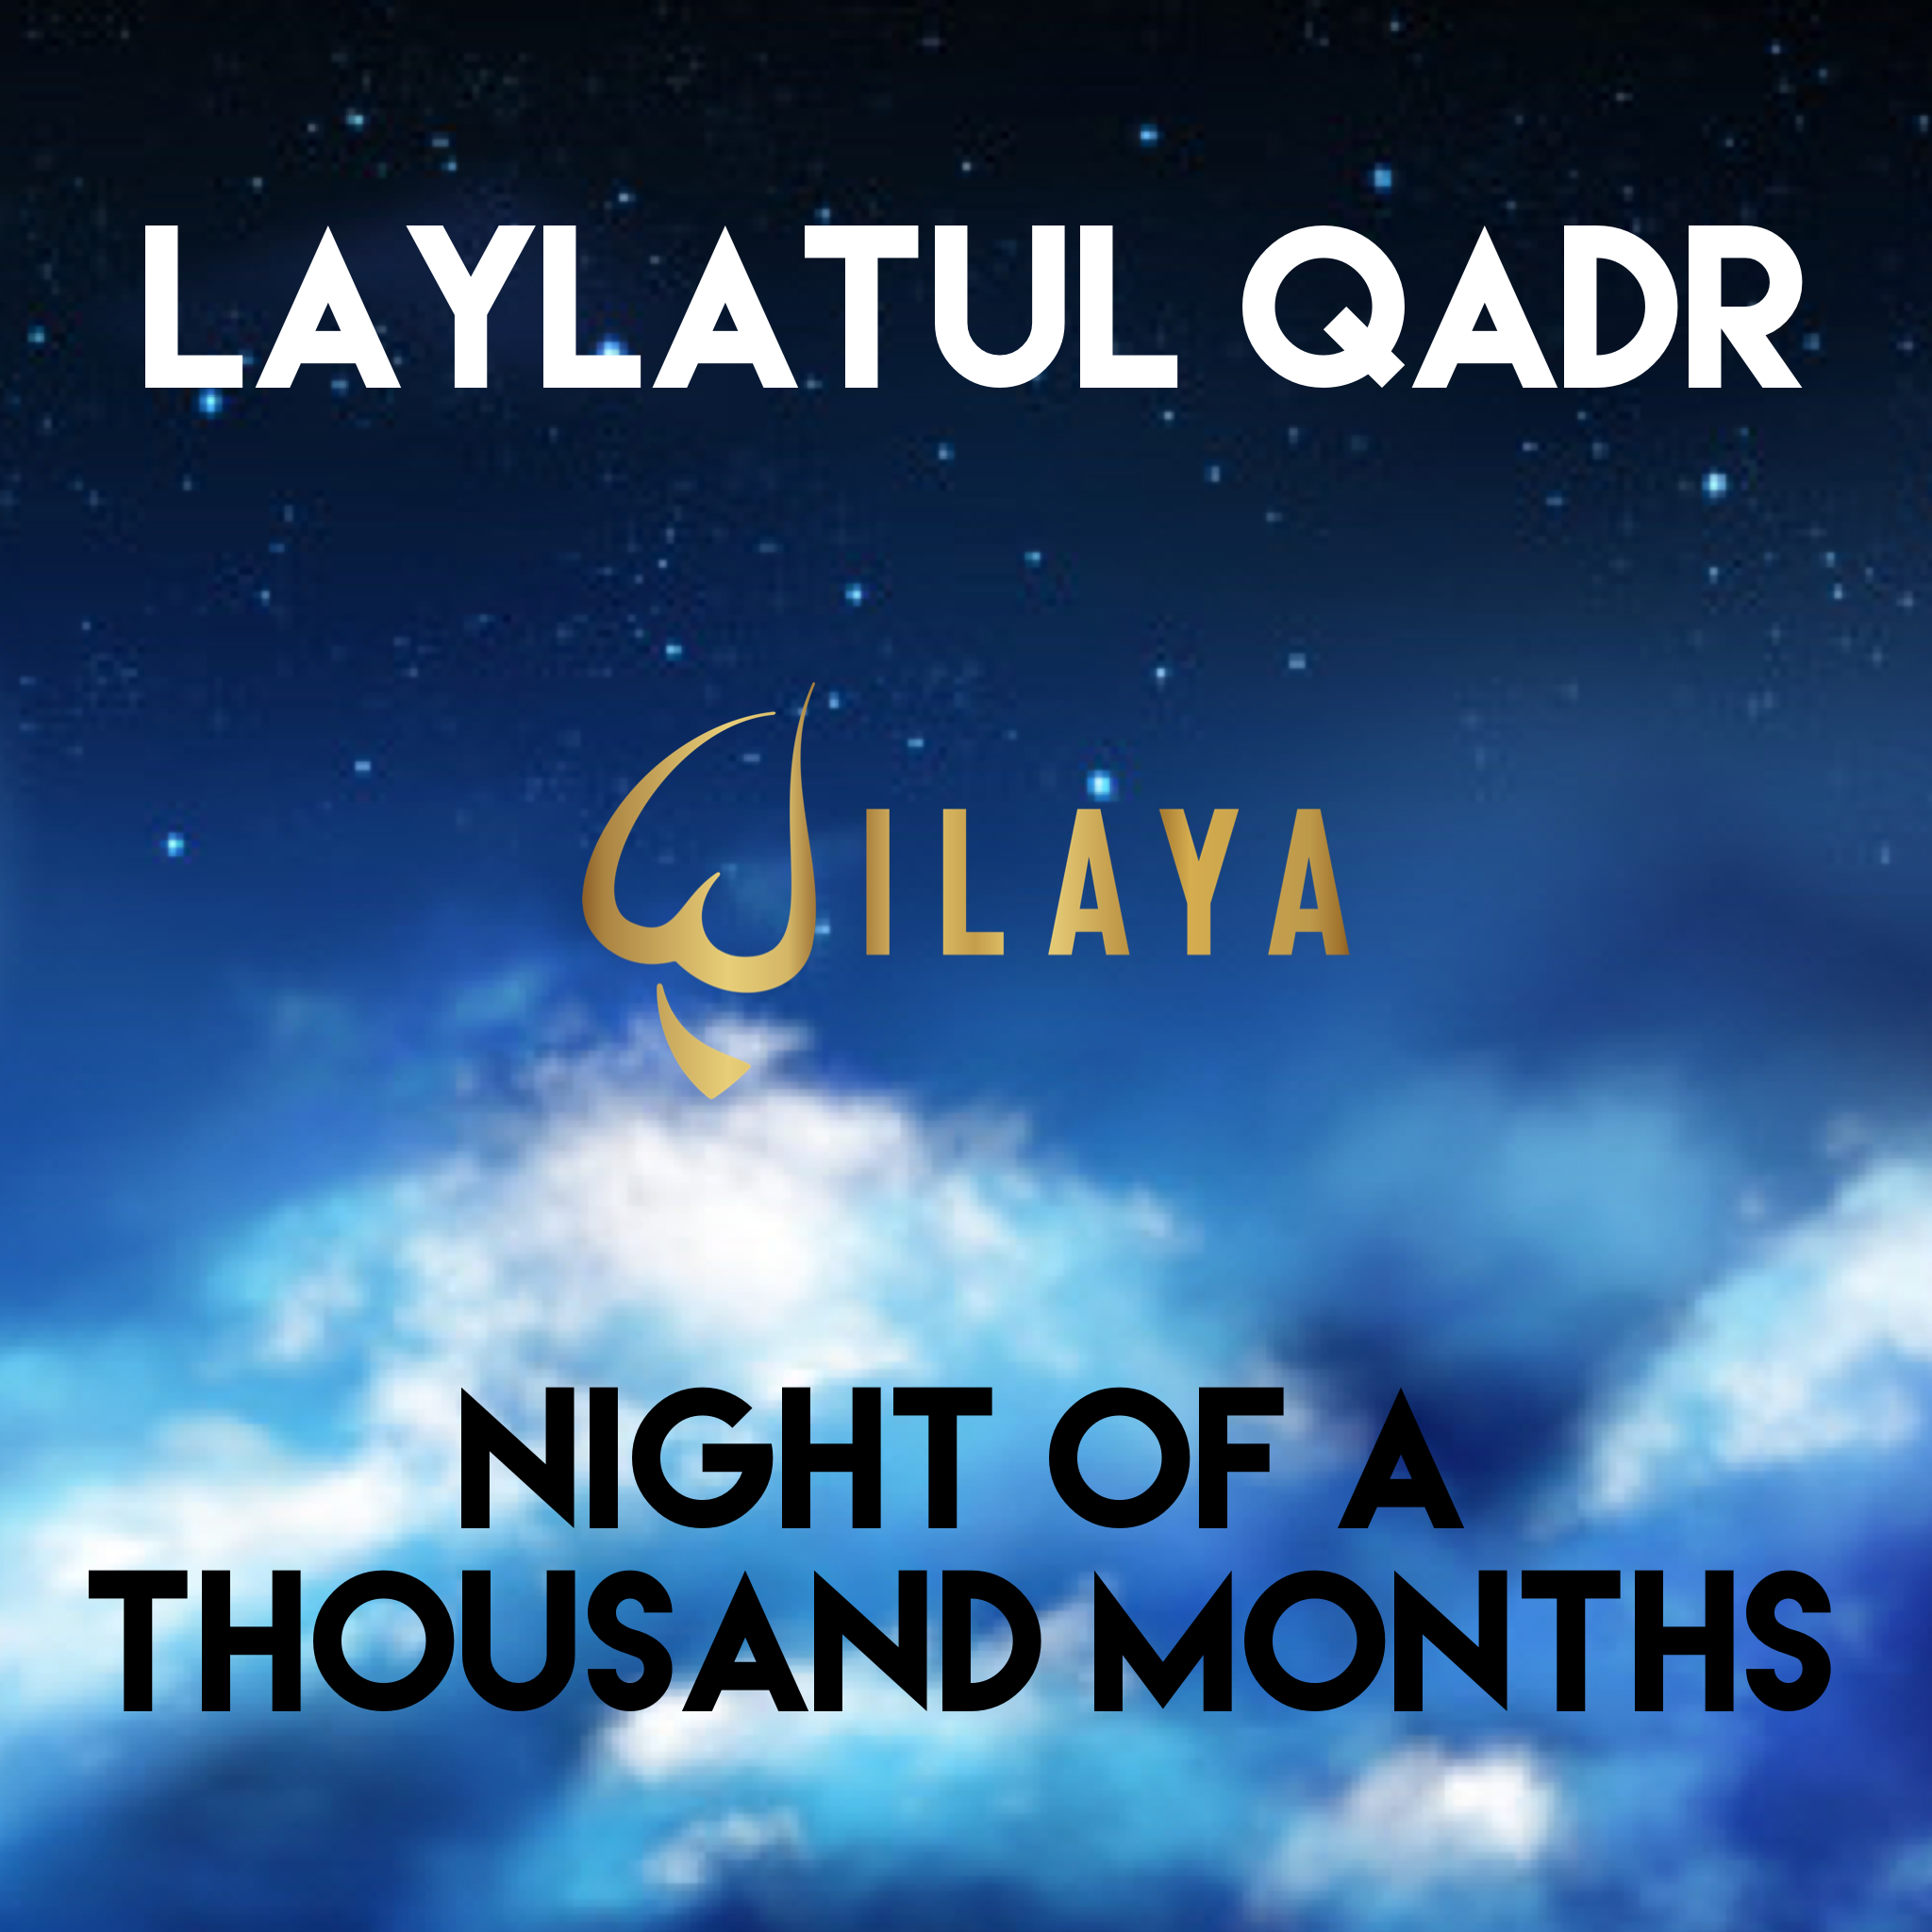 Laylatul Qadr - Night of a Thousand Months